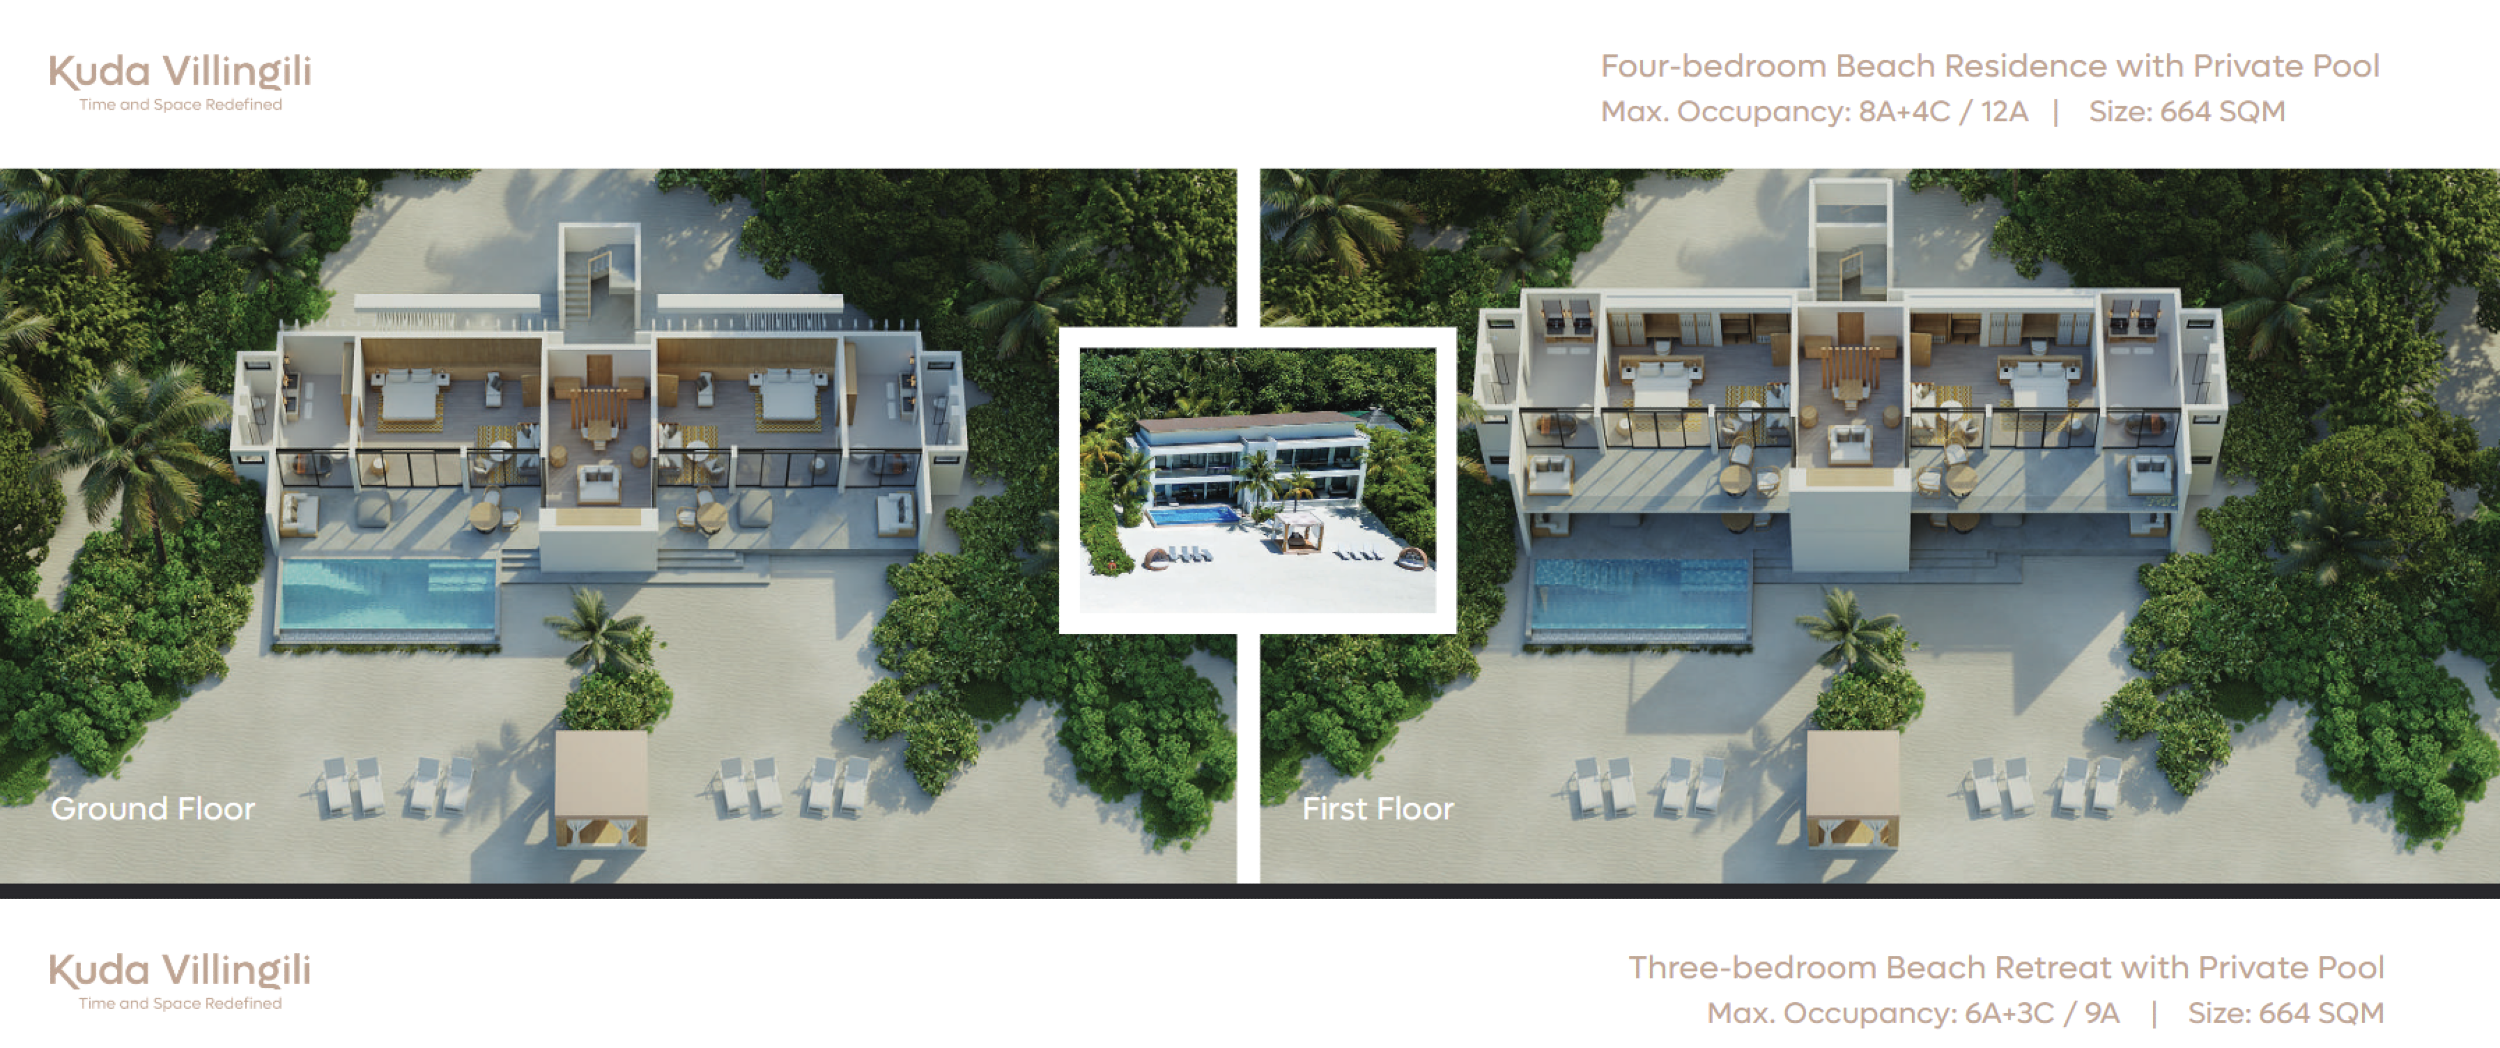 Four-bedroom Beach Residence with Private Pool - Floor Plan - Kuda Villingili Resort Maldives